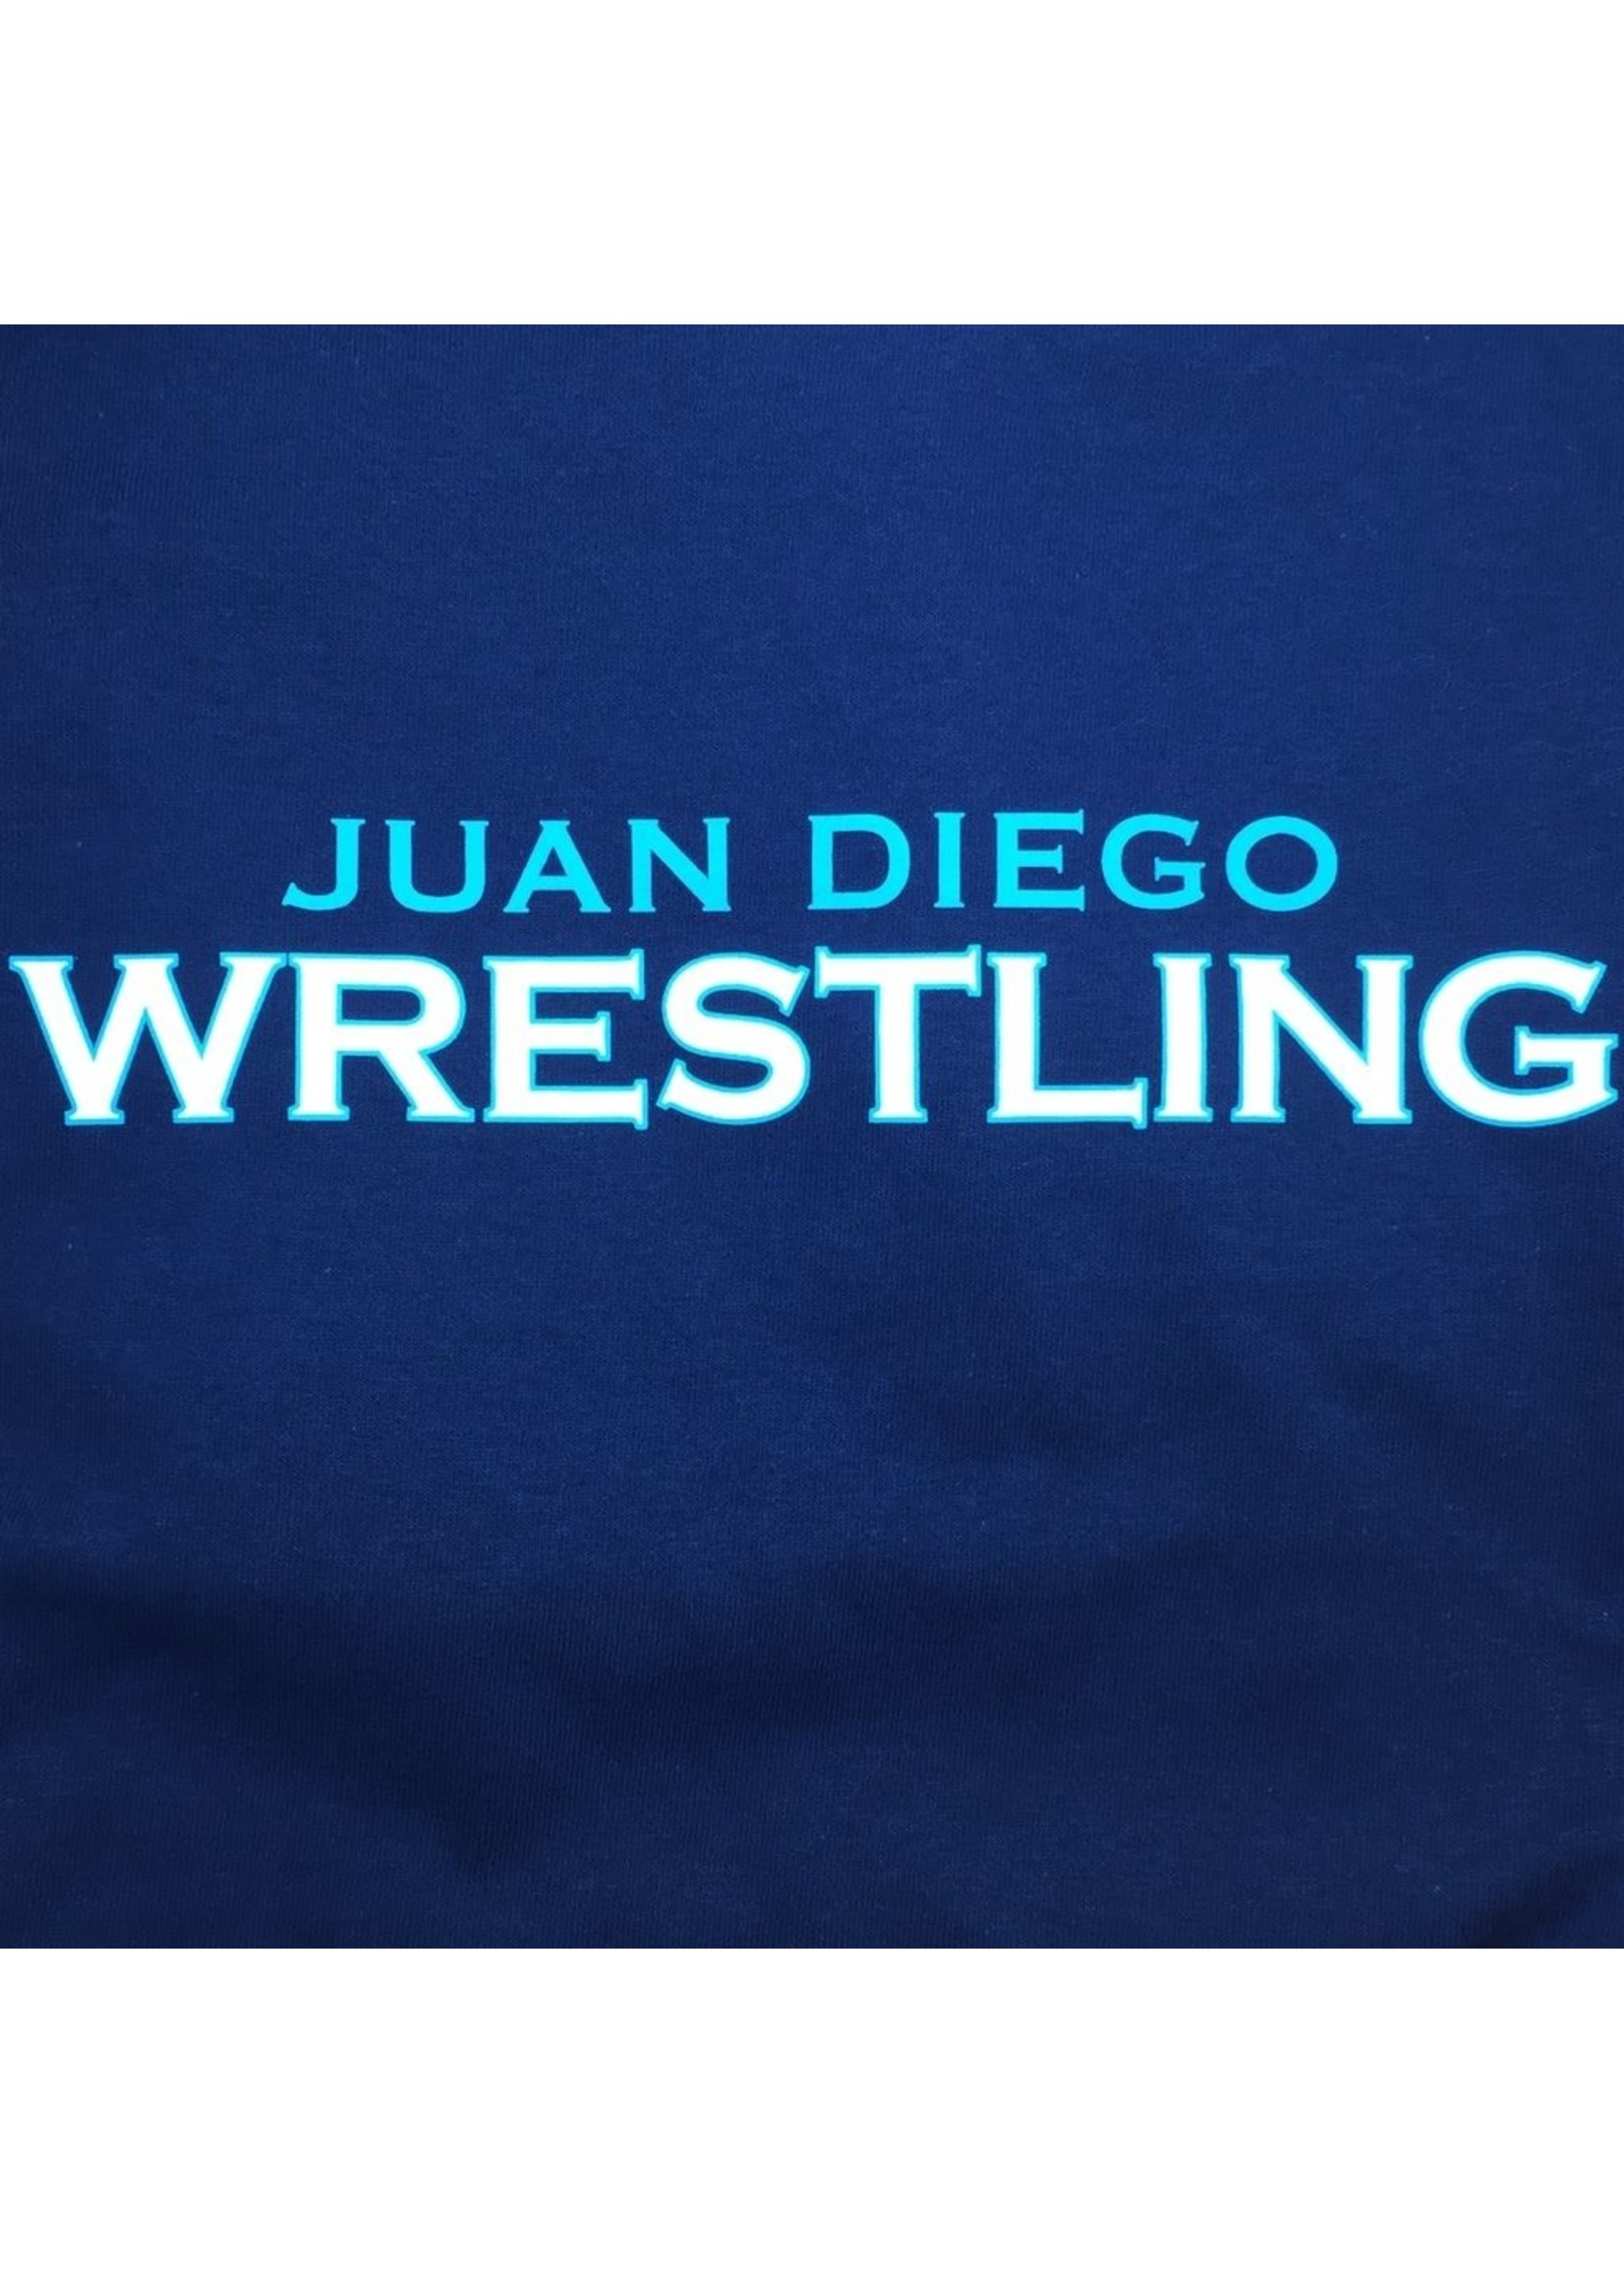 NON-UNIFORM Wrestling, Juan Diego Wrestling Unisex s/s Tee